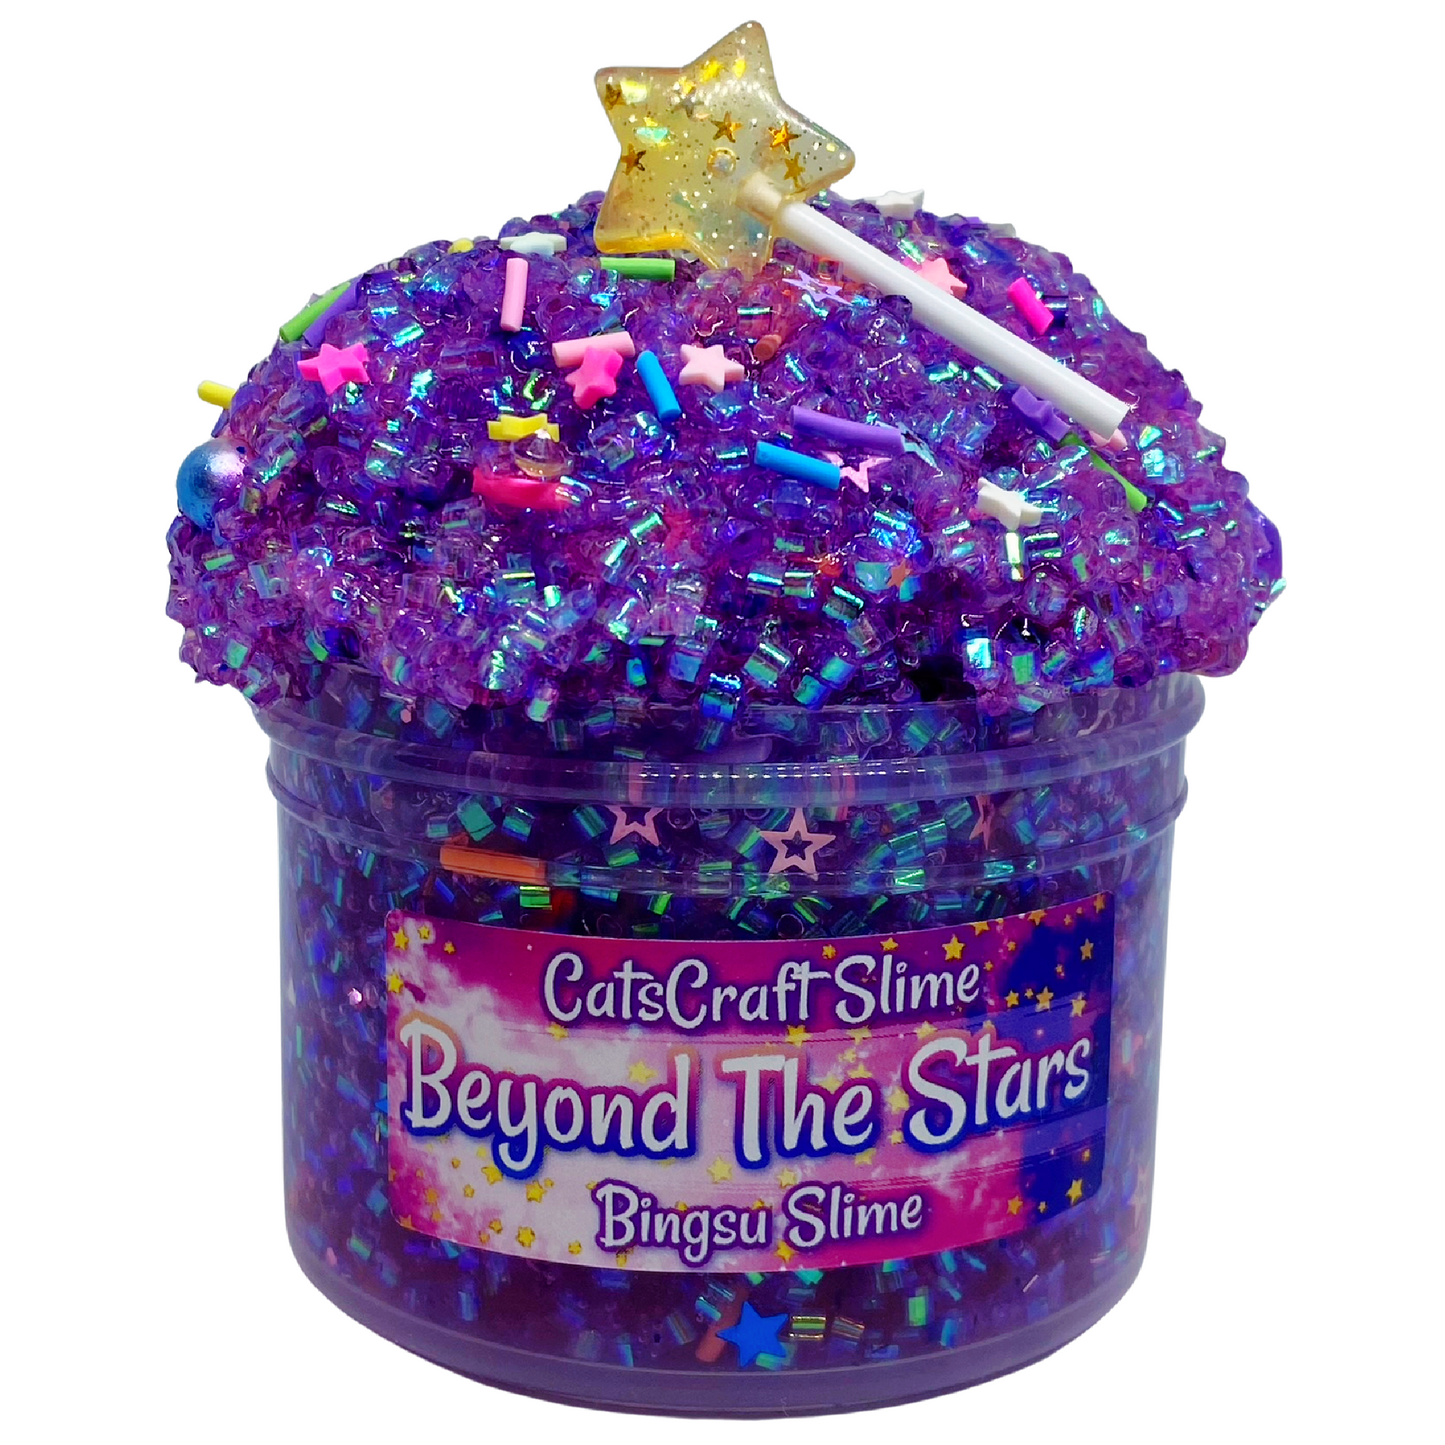 Bingsu Slime "Beyond The Stars" SCENTED clear bingsu bead crunchy ASMR With star Charm